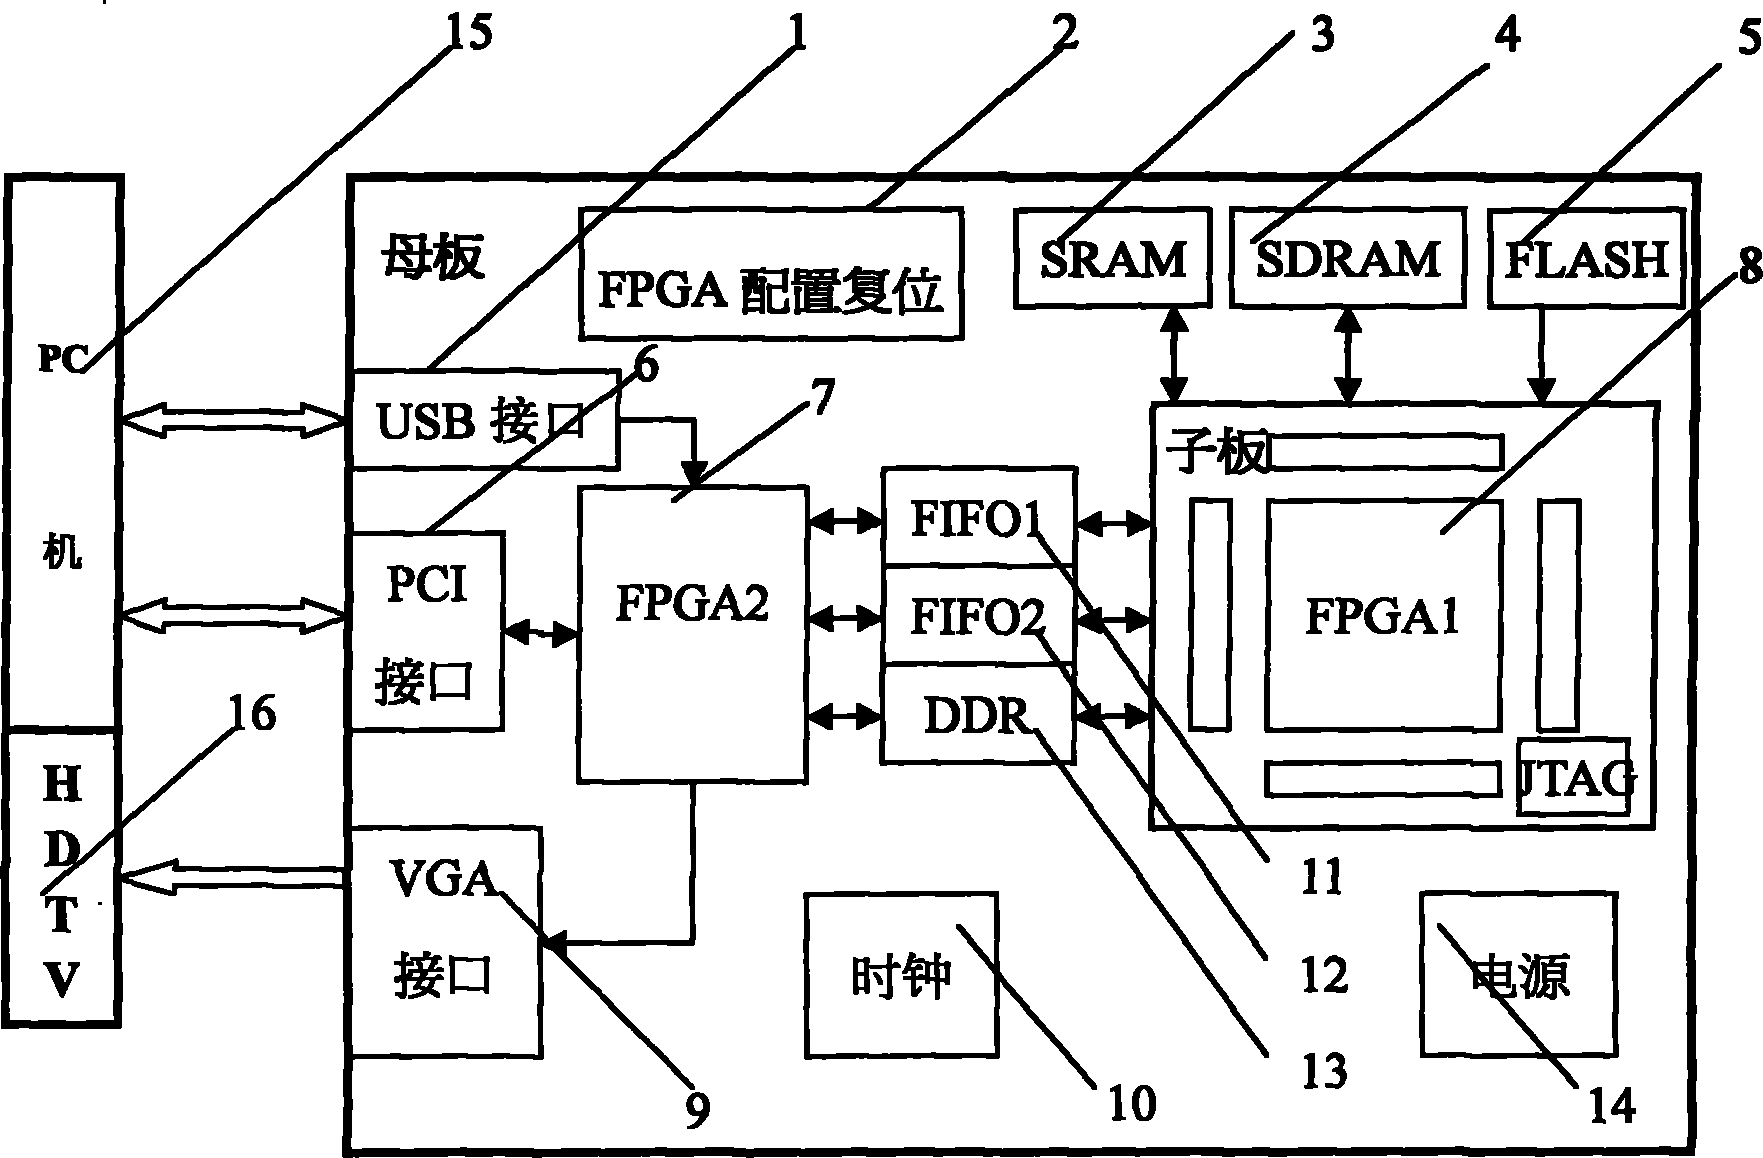 FPGA (Field Programmable Gate Array)-based AVS (Audio Video Standard) decoding chip verification platform device and method